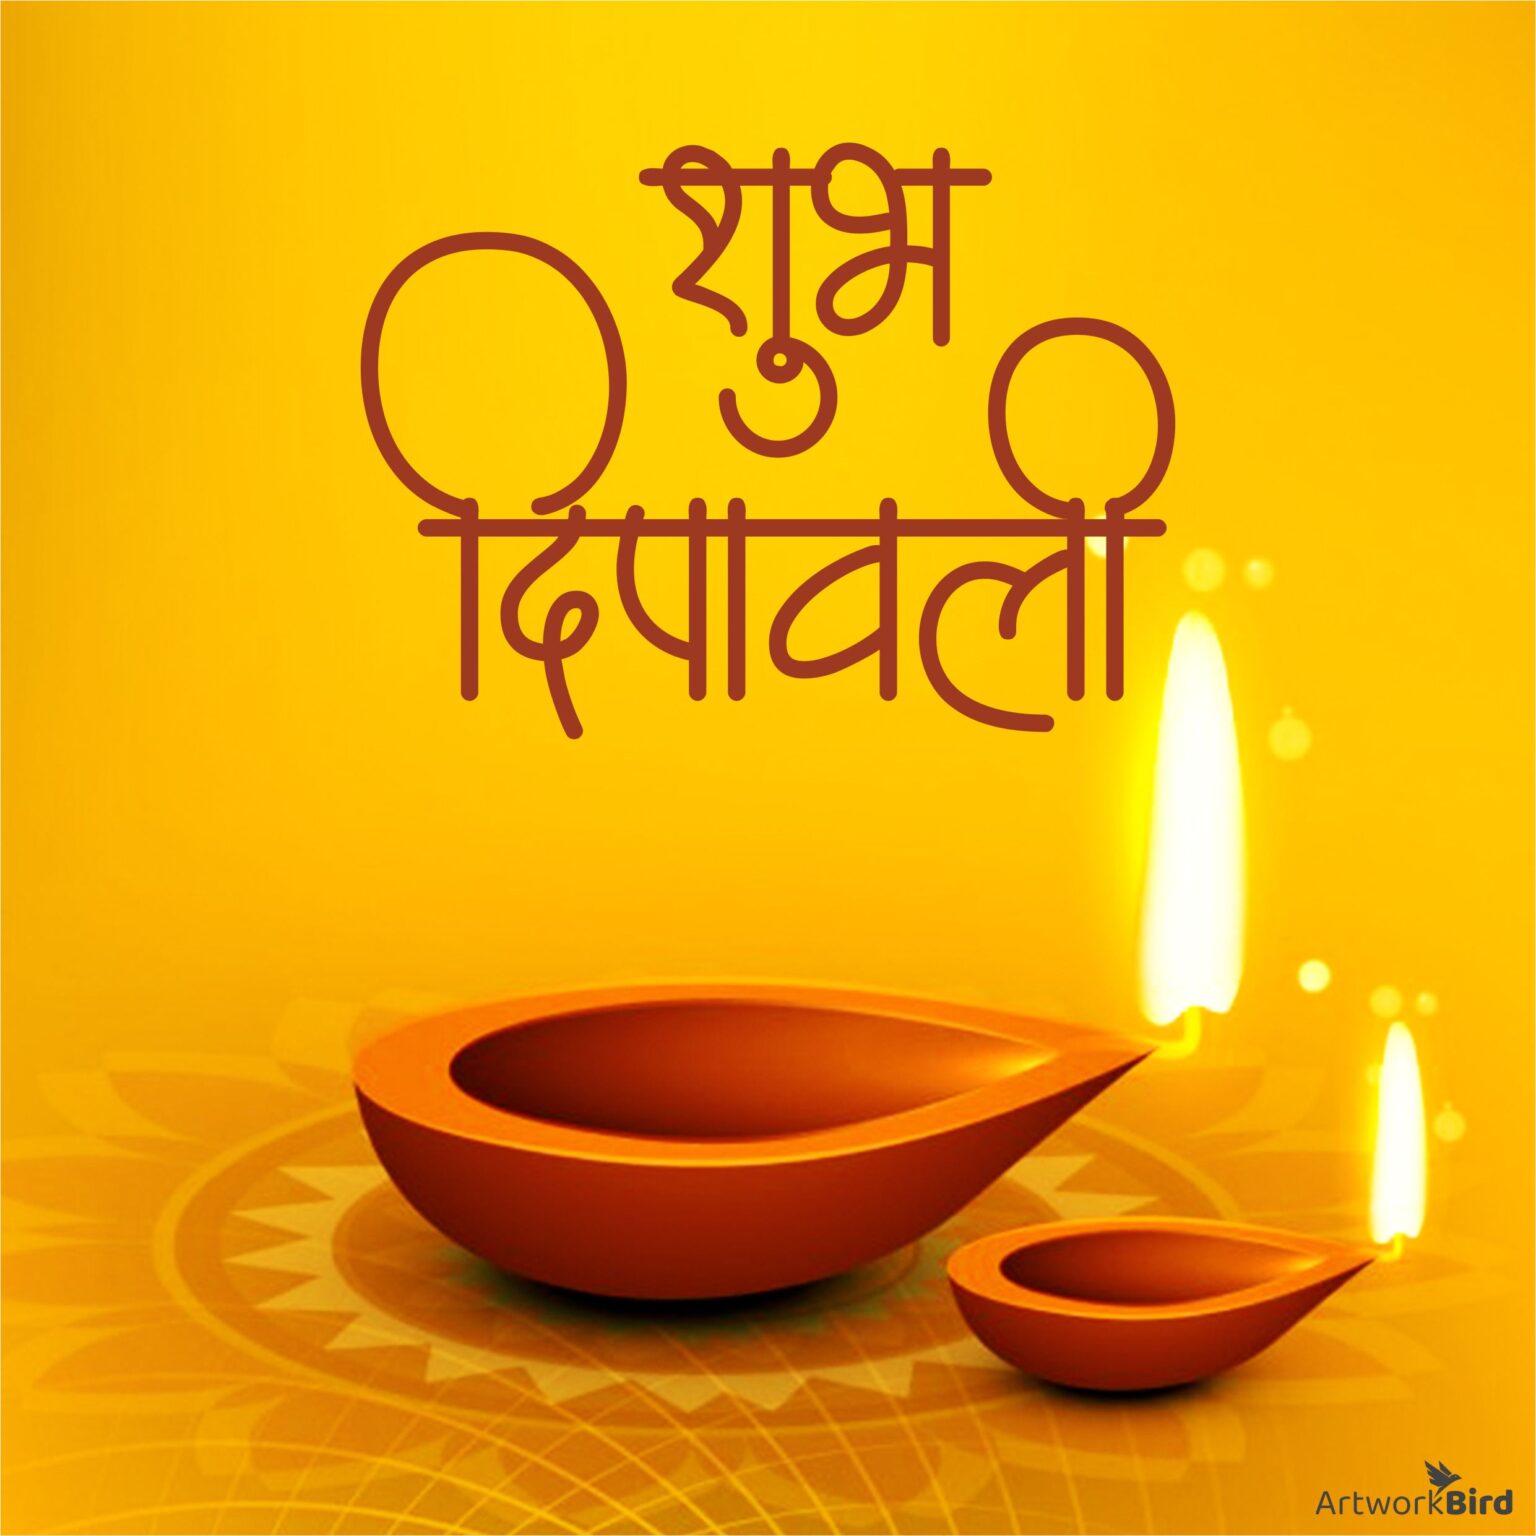 Image Of Happy Diwali Greetings In Hindi And Marathi Calligraphy | My ...